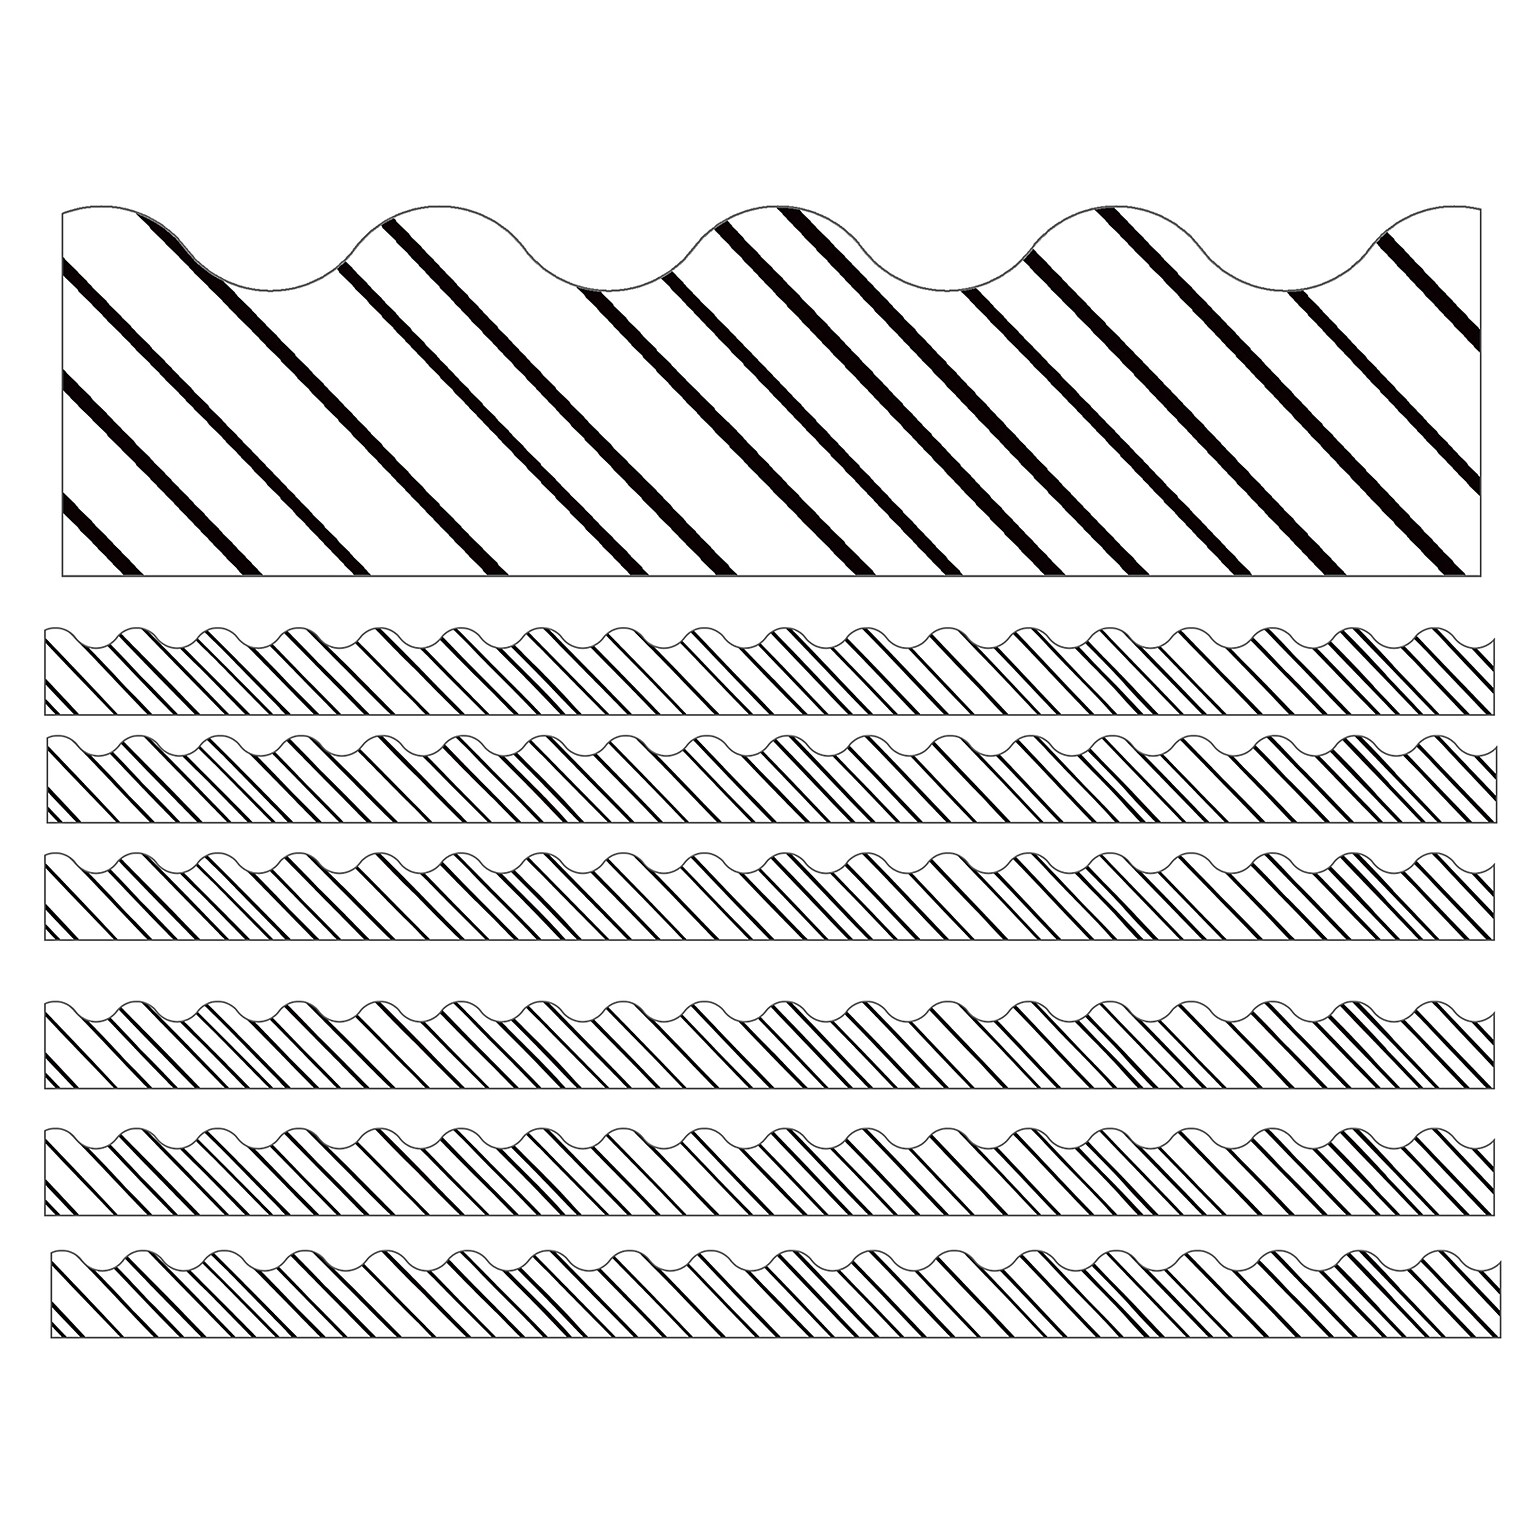 Carson Dellosa Education Kind Vibes Scalloped Border, 2.25 x 234, Black & White Stripes (CD-108434-6)